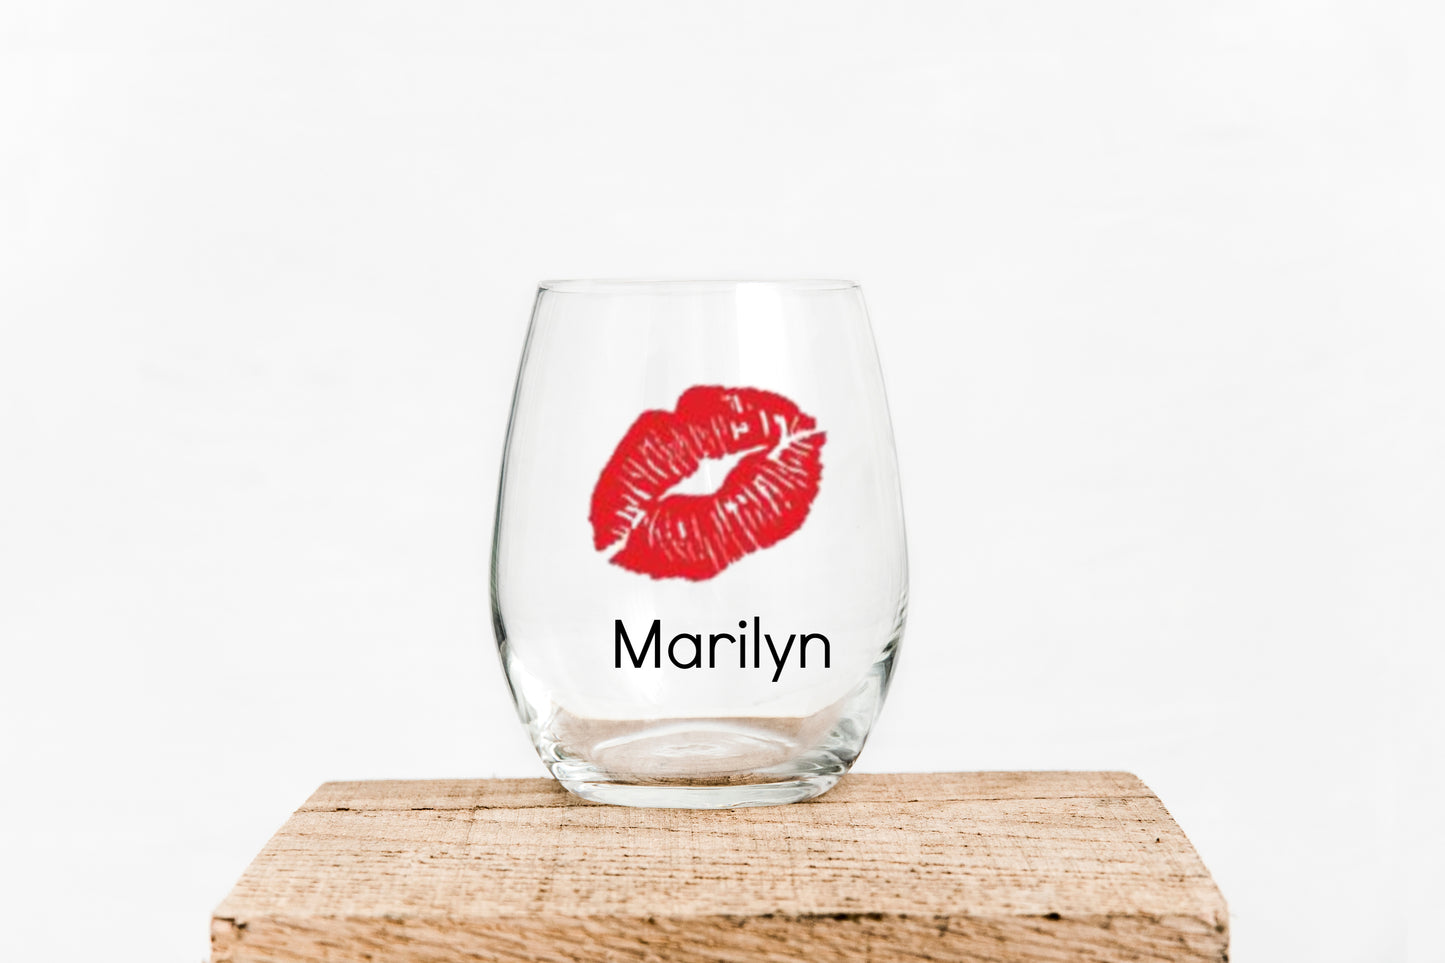 Marilyn red lips wine glass